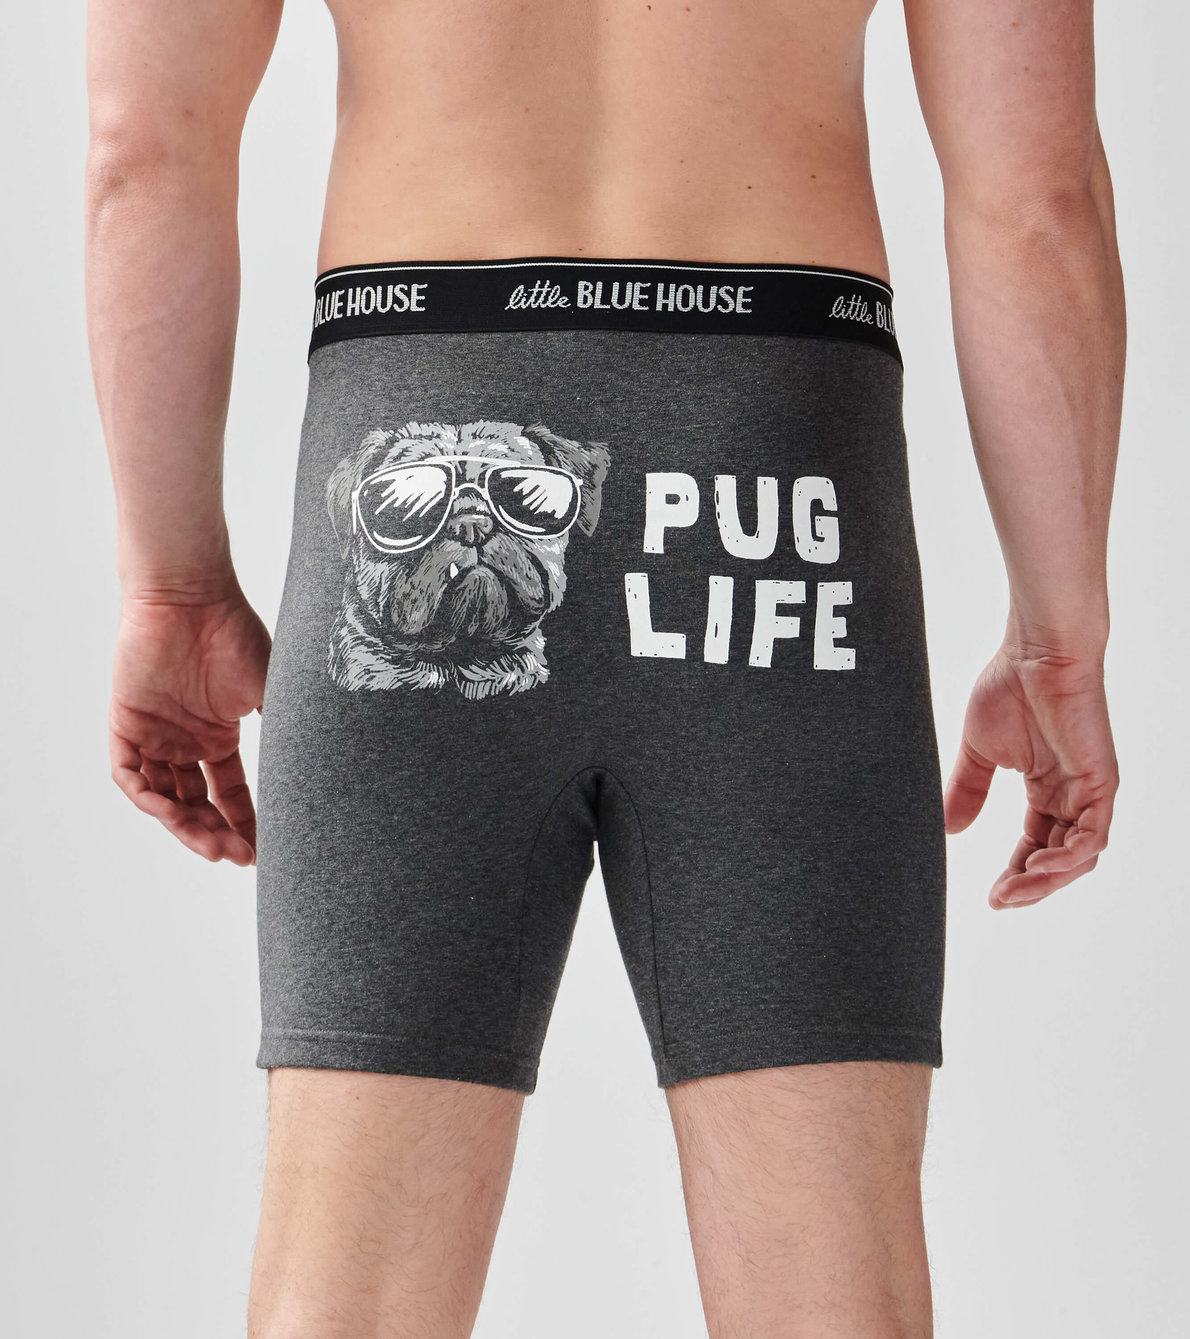 View larger image of Pug Life Men's Boxer Briefs